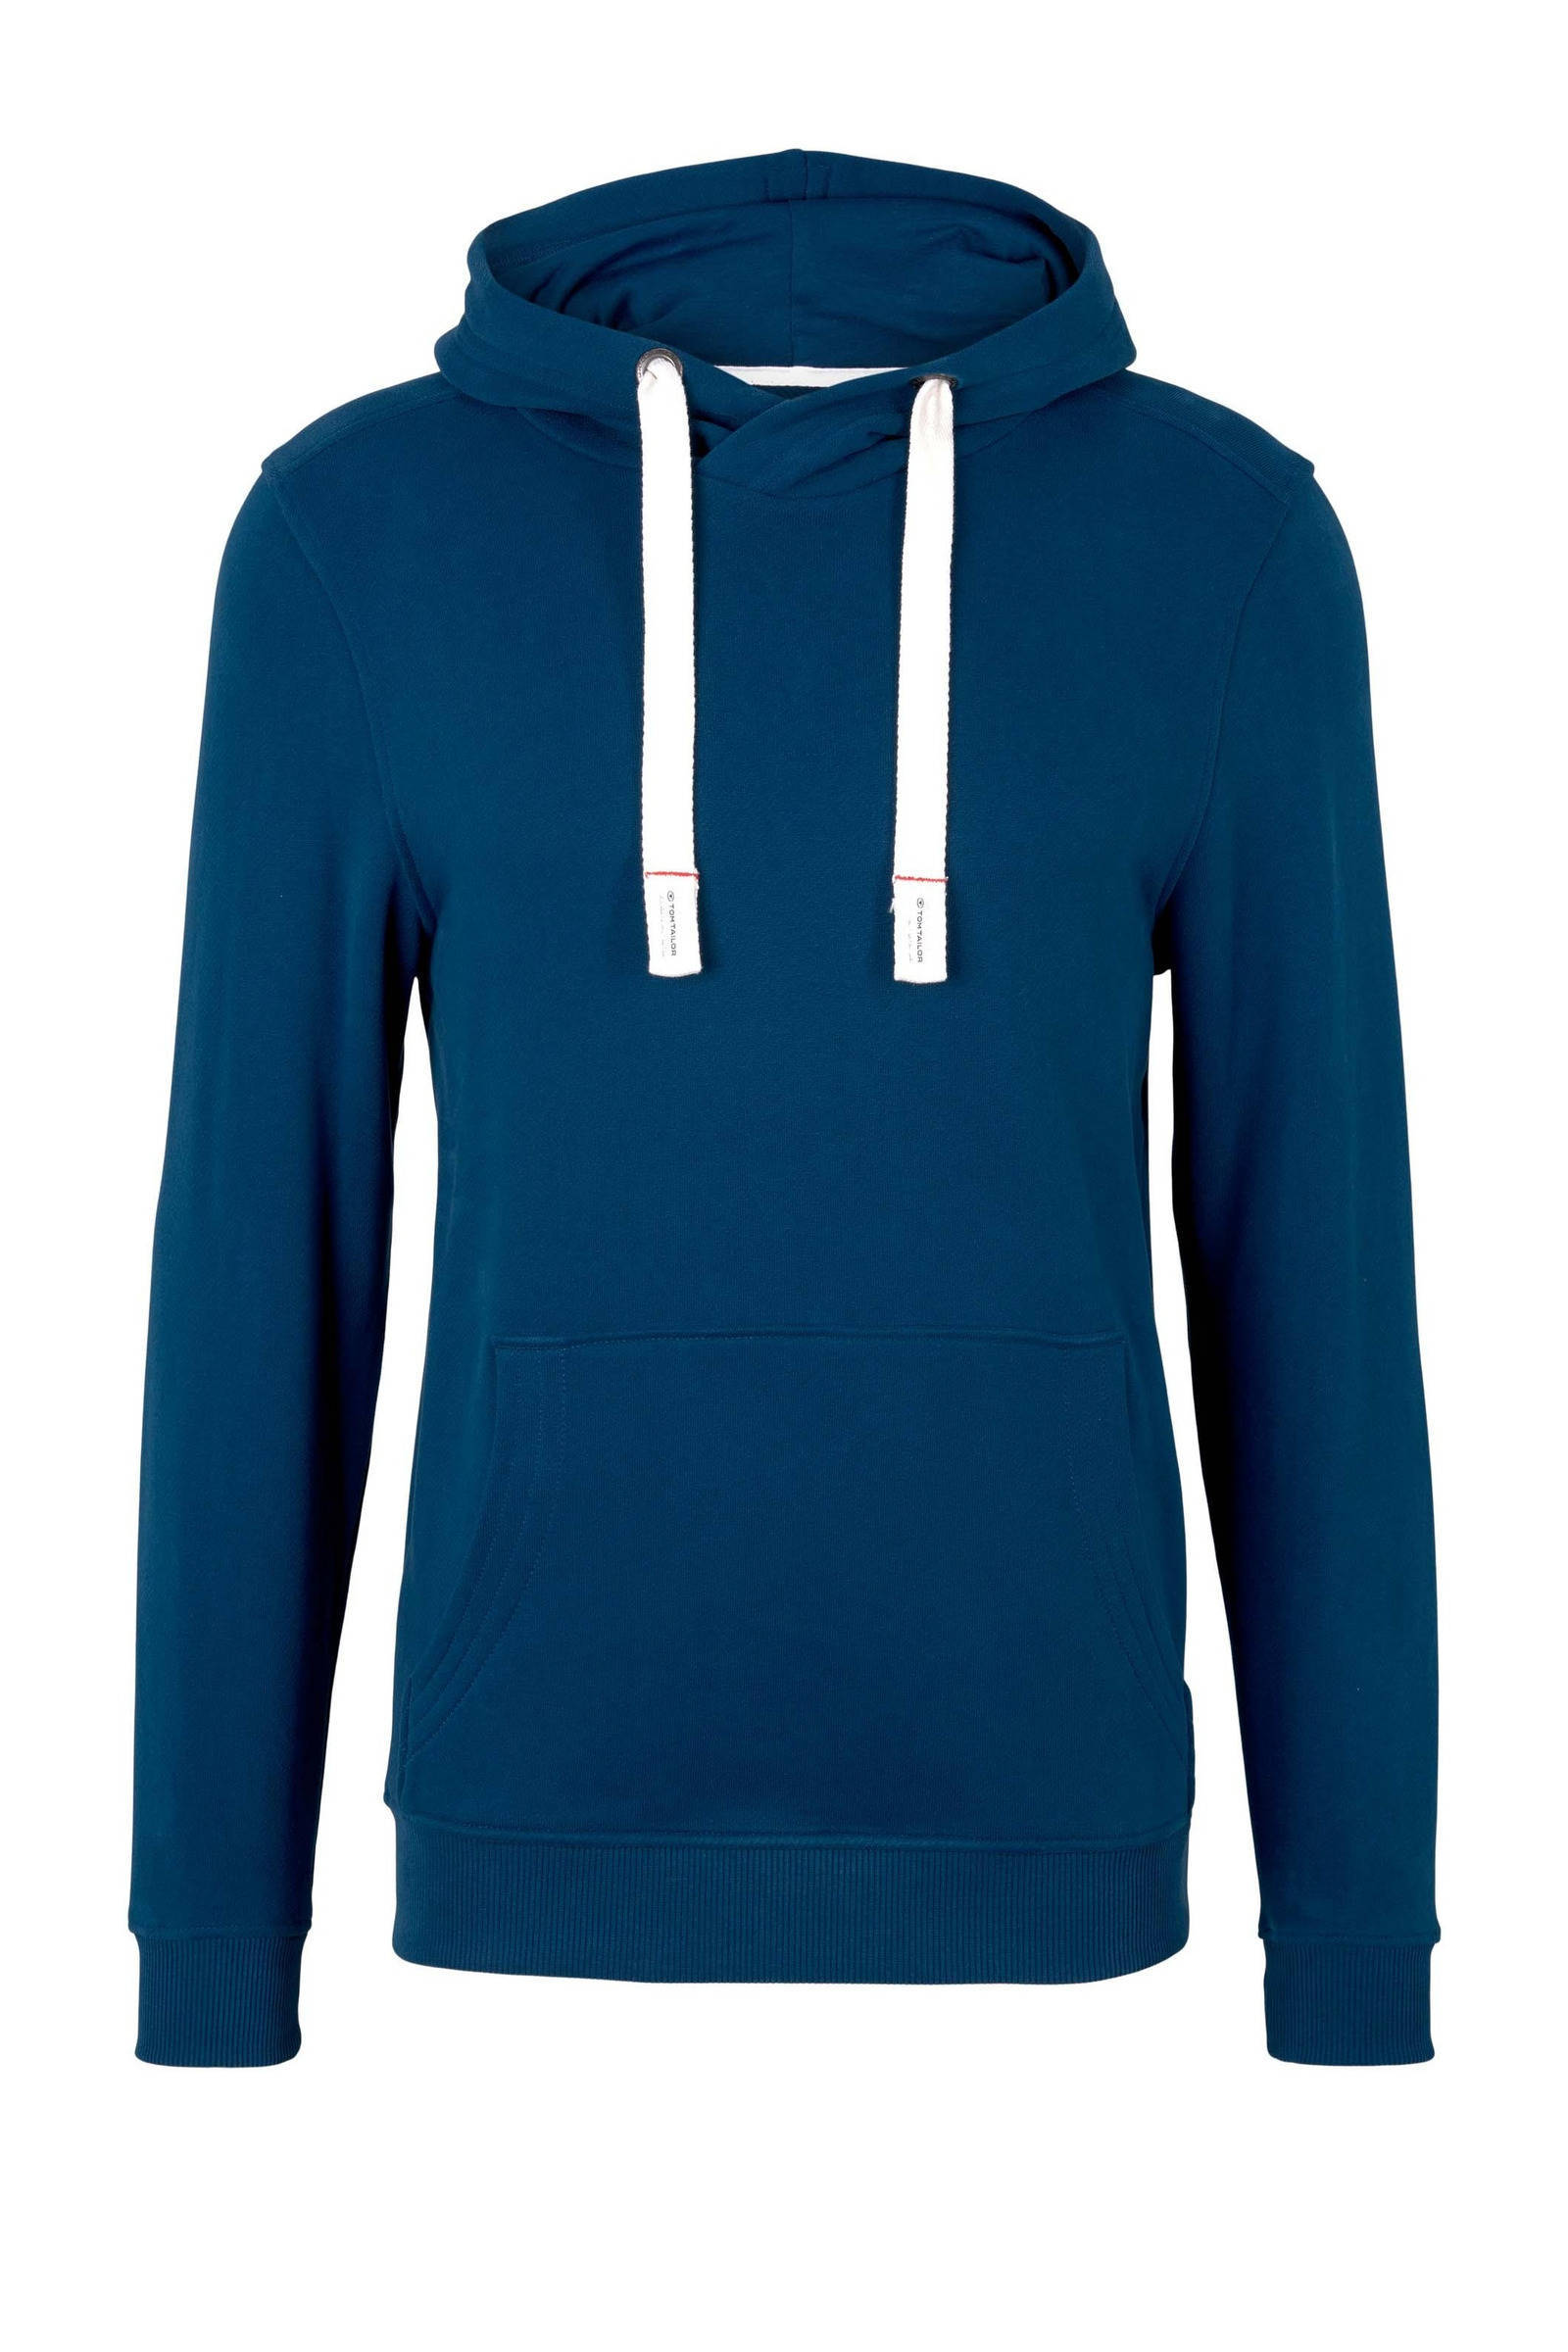 Tom Tailor hoodie poseidon blue online kopen